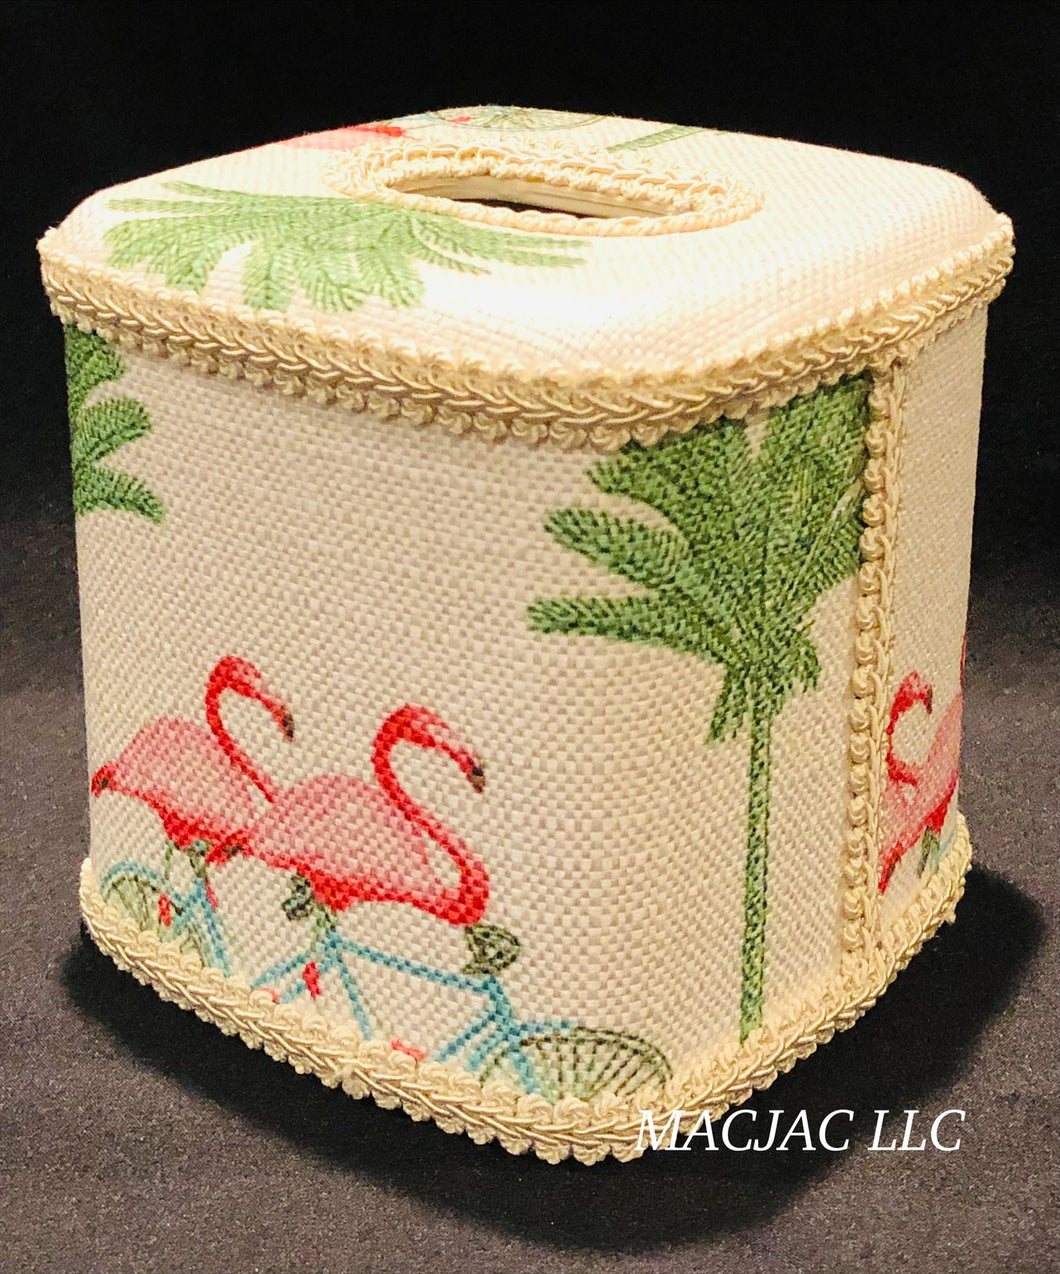 Bike Flamingo Fabric Covered Tissue Box Cover